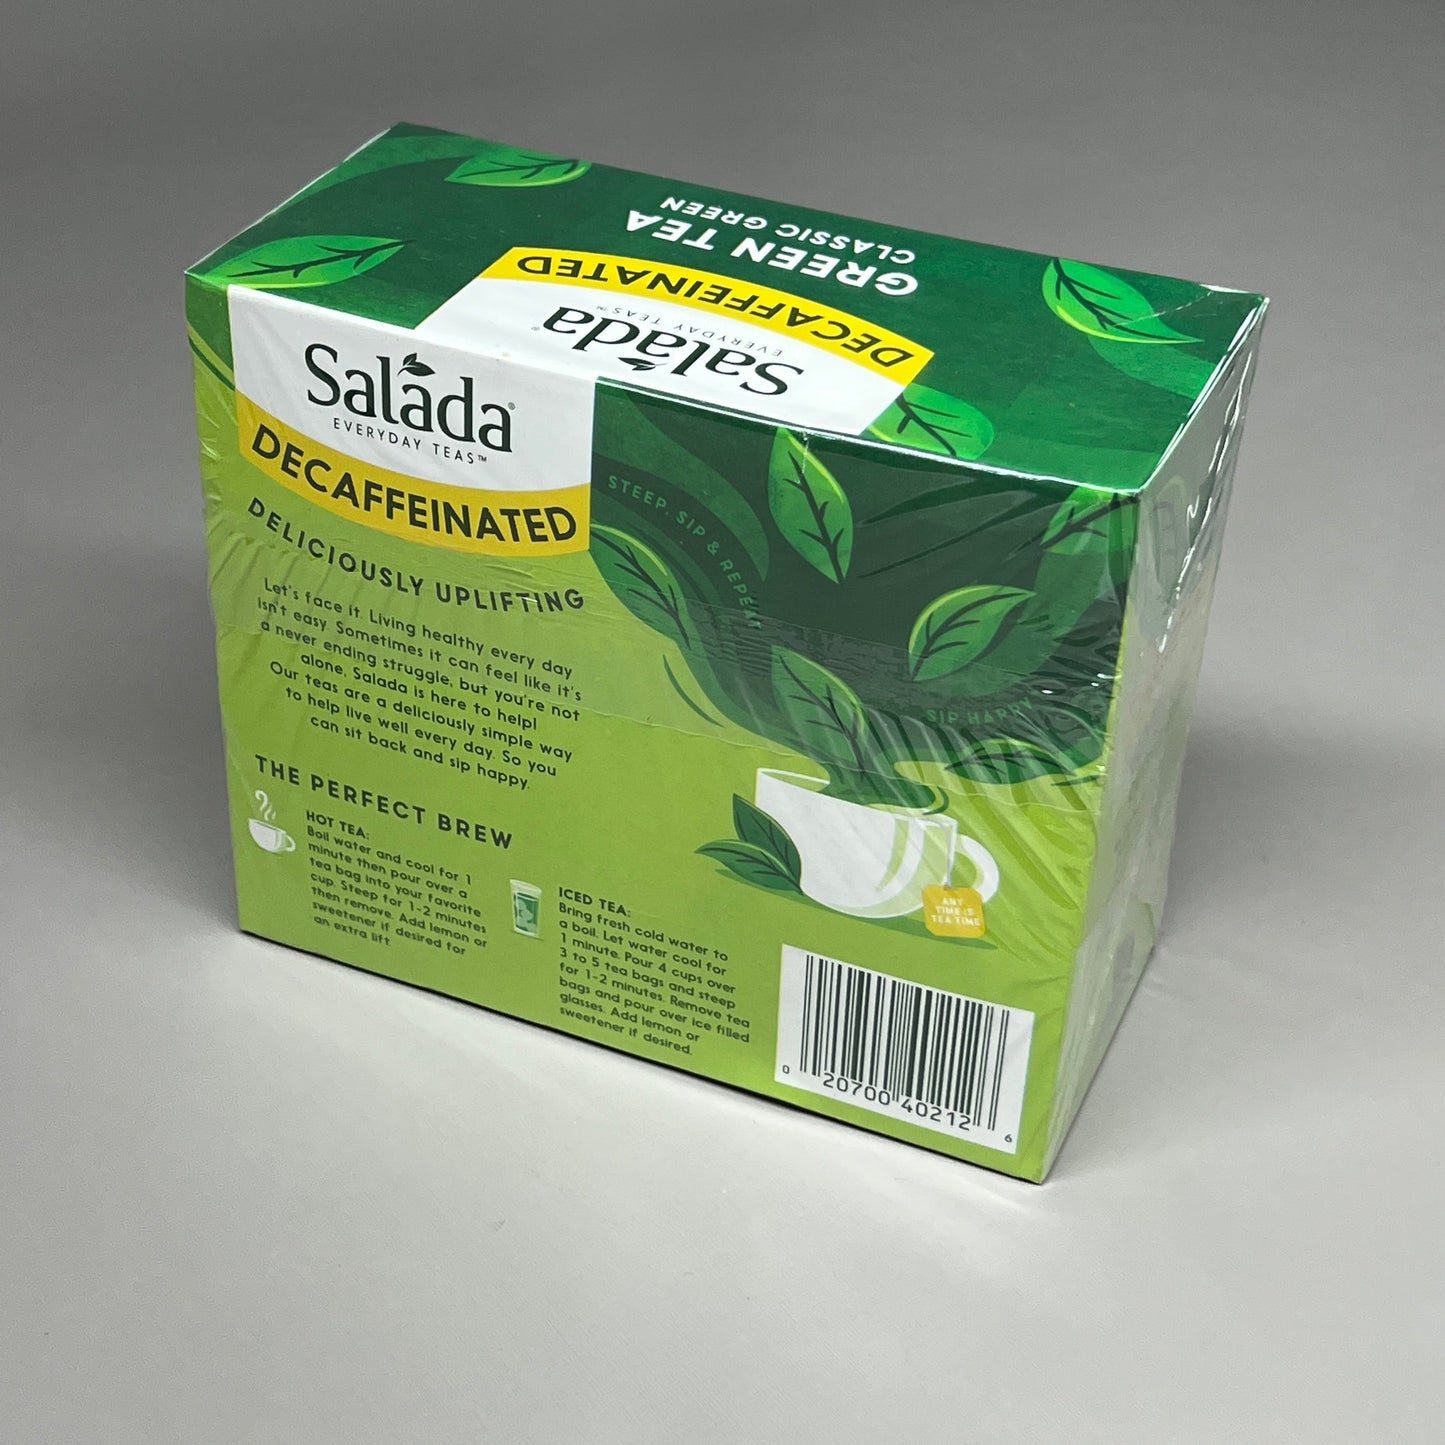 ZA@ SALADA Decaffeinated Classic Green Tea 40 Count Bags BB Dec 2023 (AS-IS) J